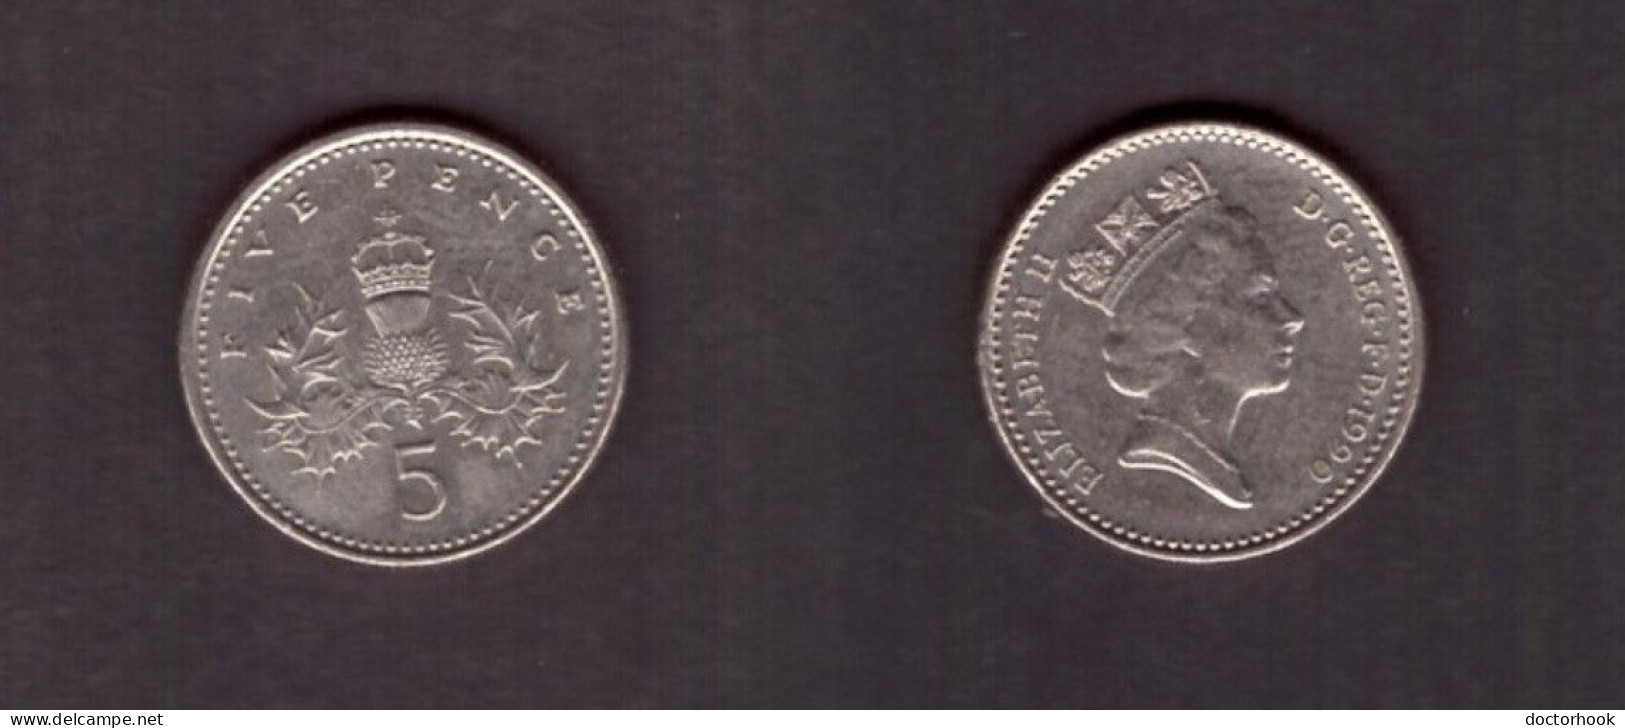 GREAT BRITAIN   5 PENCE 1990 (KM # 937b) #7289 - 5 Pence & 5 New Pence